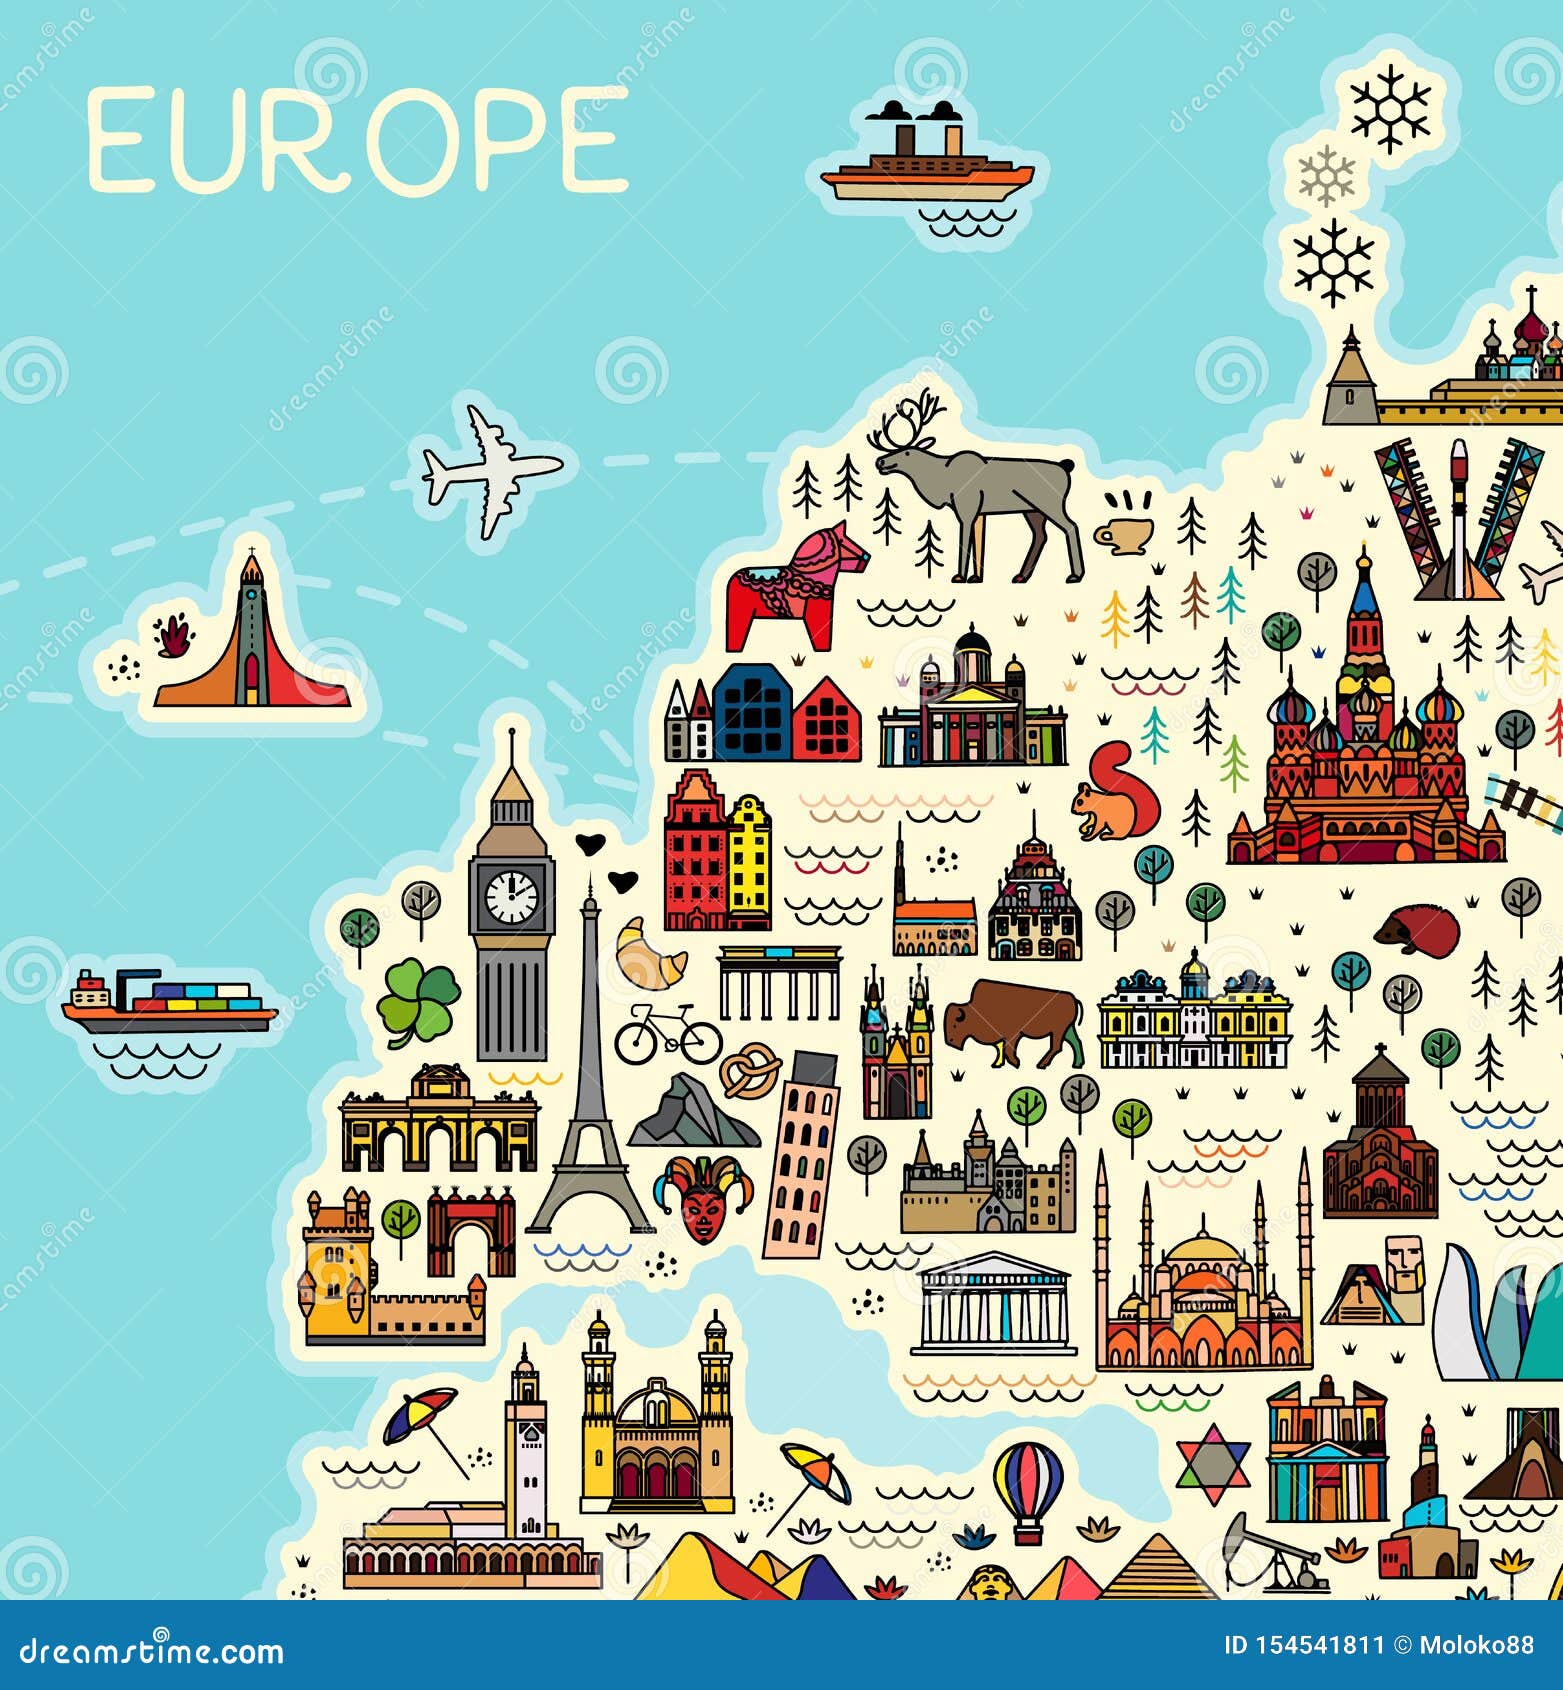 travel guide around europe